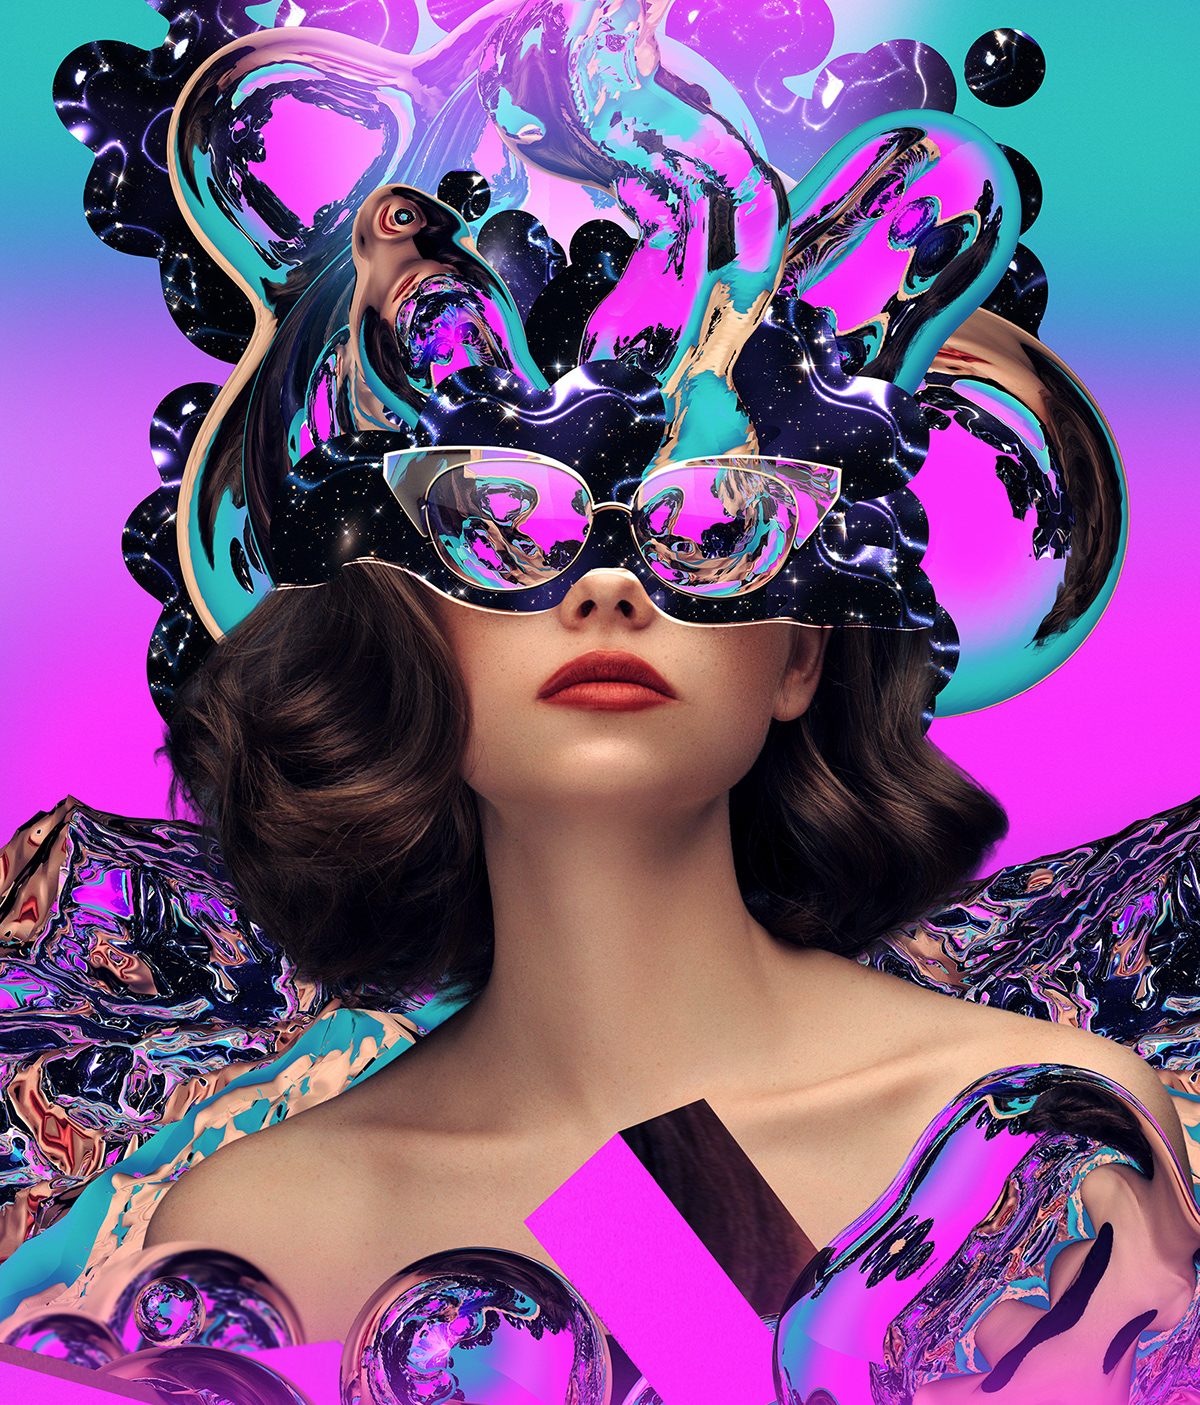 ben kokolas gradient portrait poster surreal surrealism Synthwave trippy vaporwave psychedelic